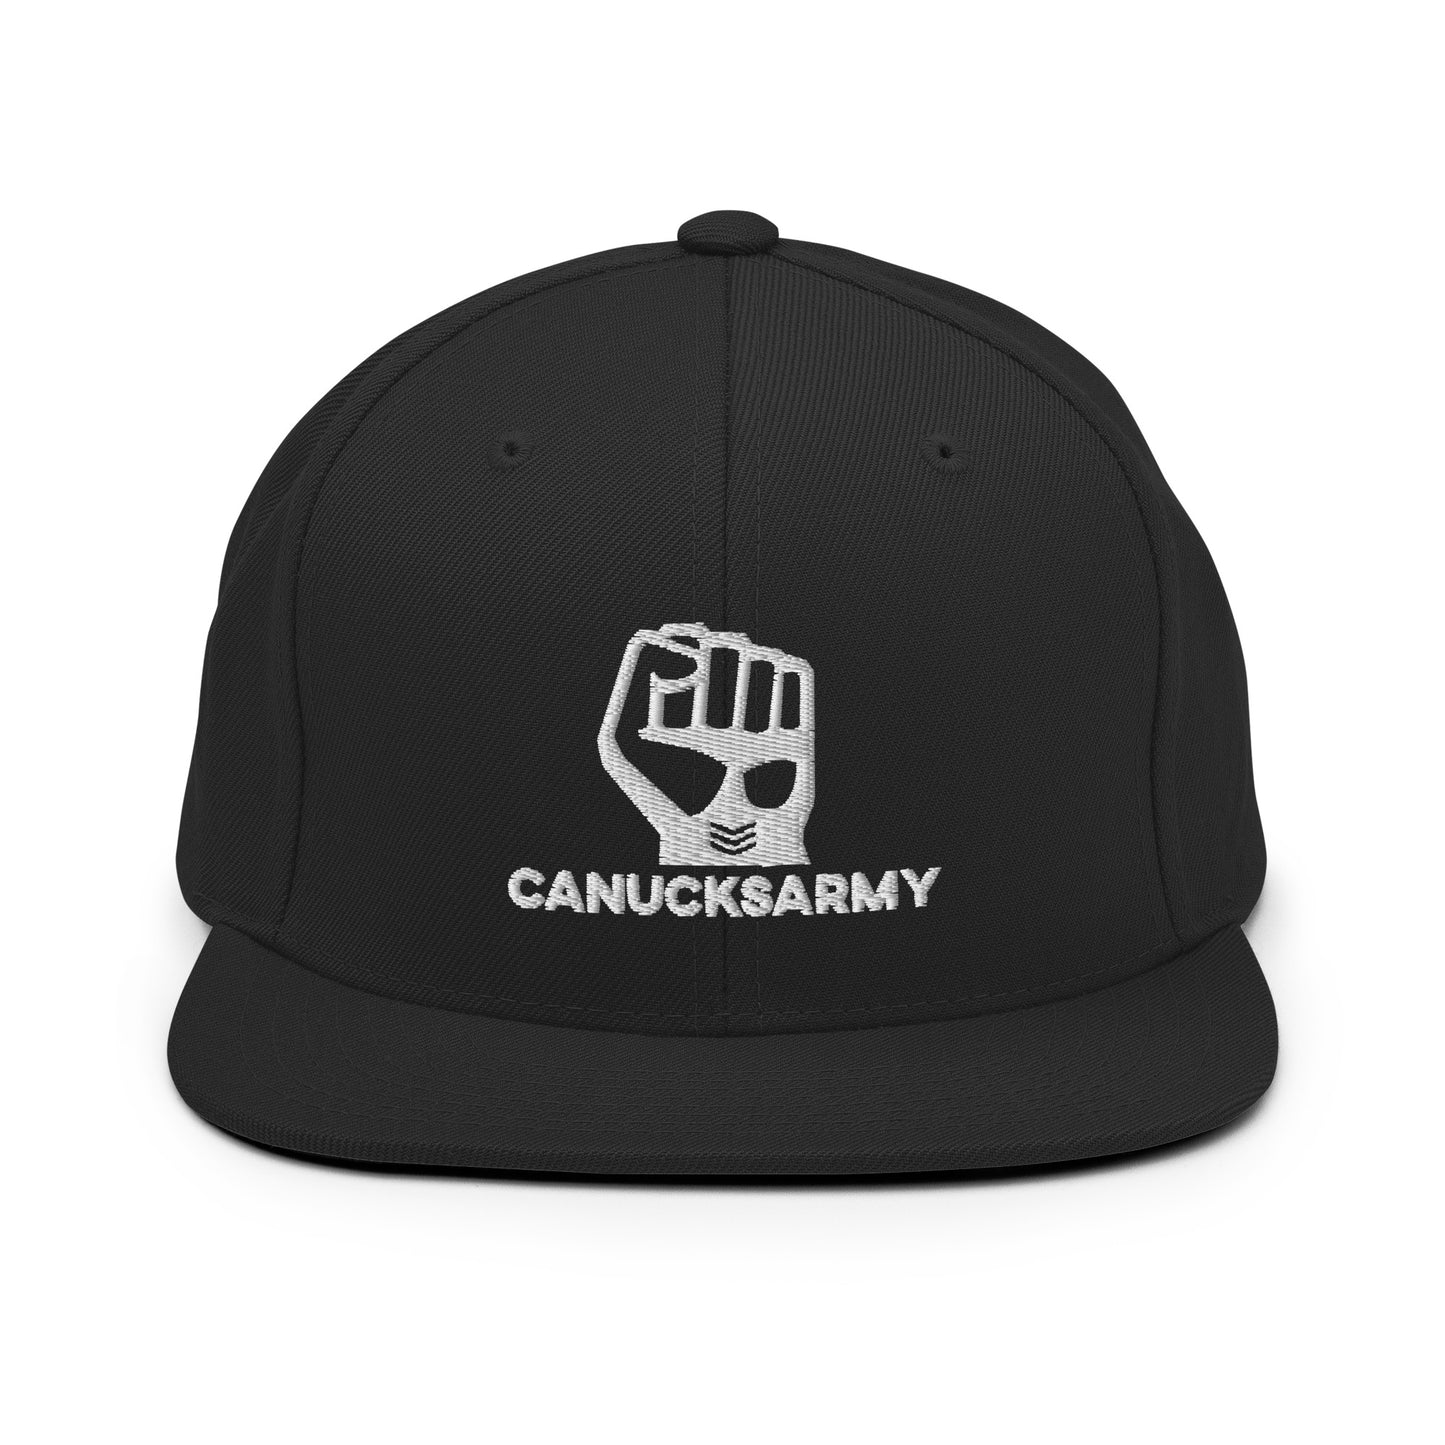 THE CLASSICS - Canucksarmy Snapback Hat